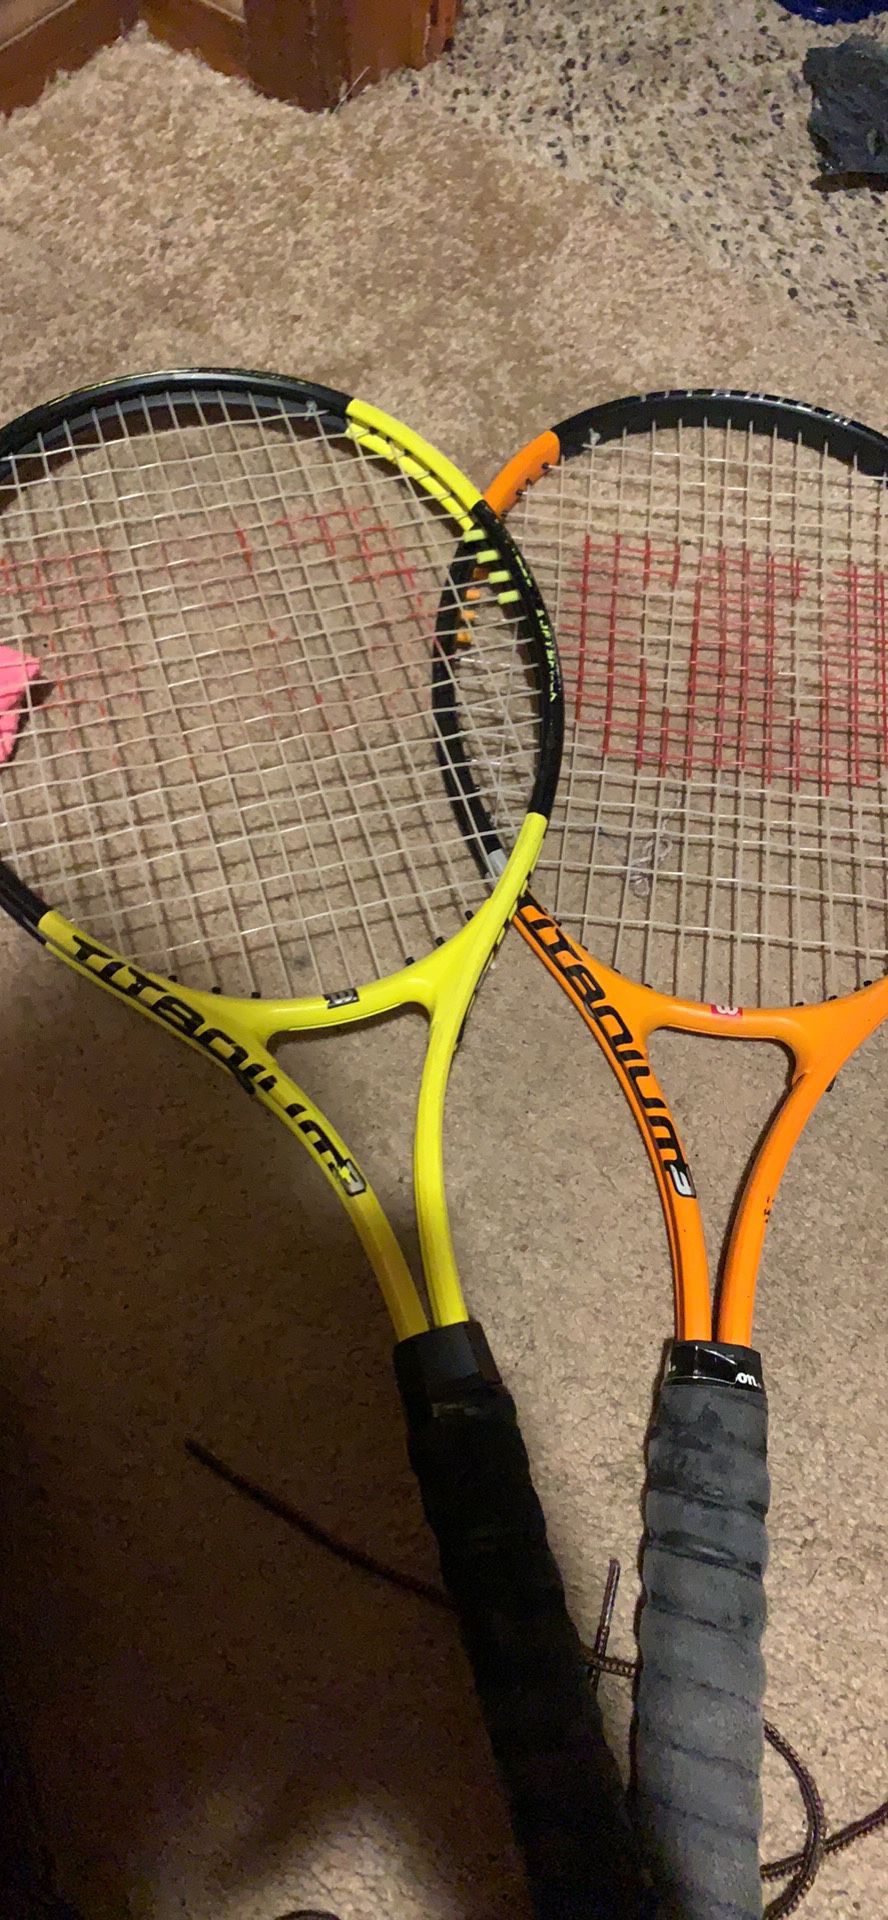 Wilson Titanium 3 tennis rackets with cases